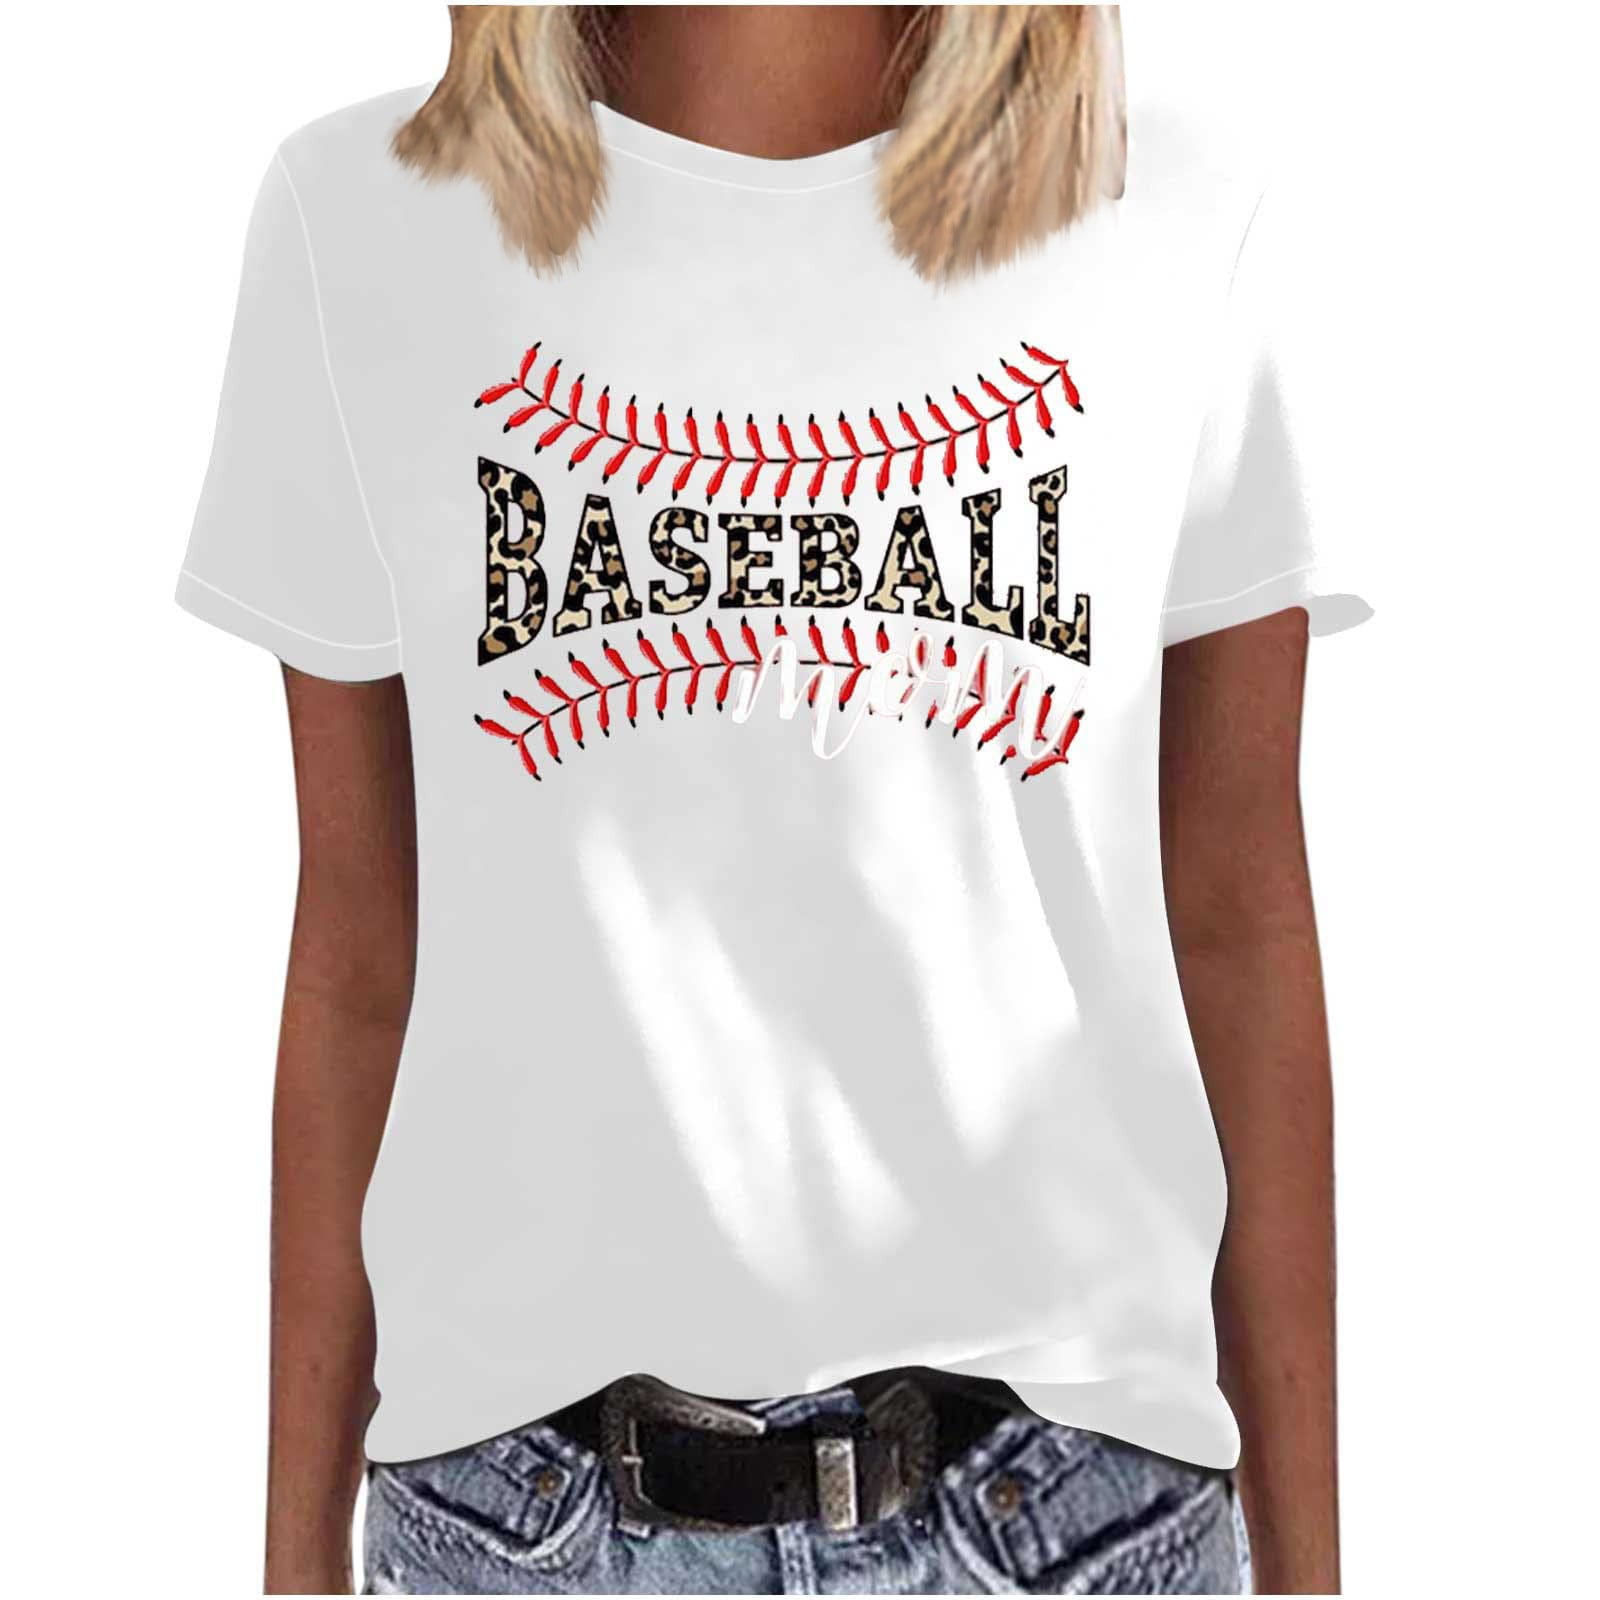 TQWQT Shirts for Women Baseball Graphic Cute T Shirt Women's Letter Printed  Softball Tees Casual Sports Tops,Light Gray S 